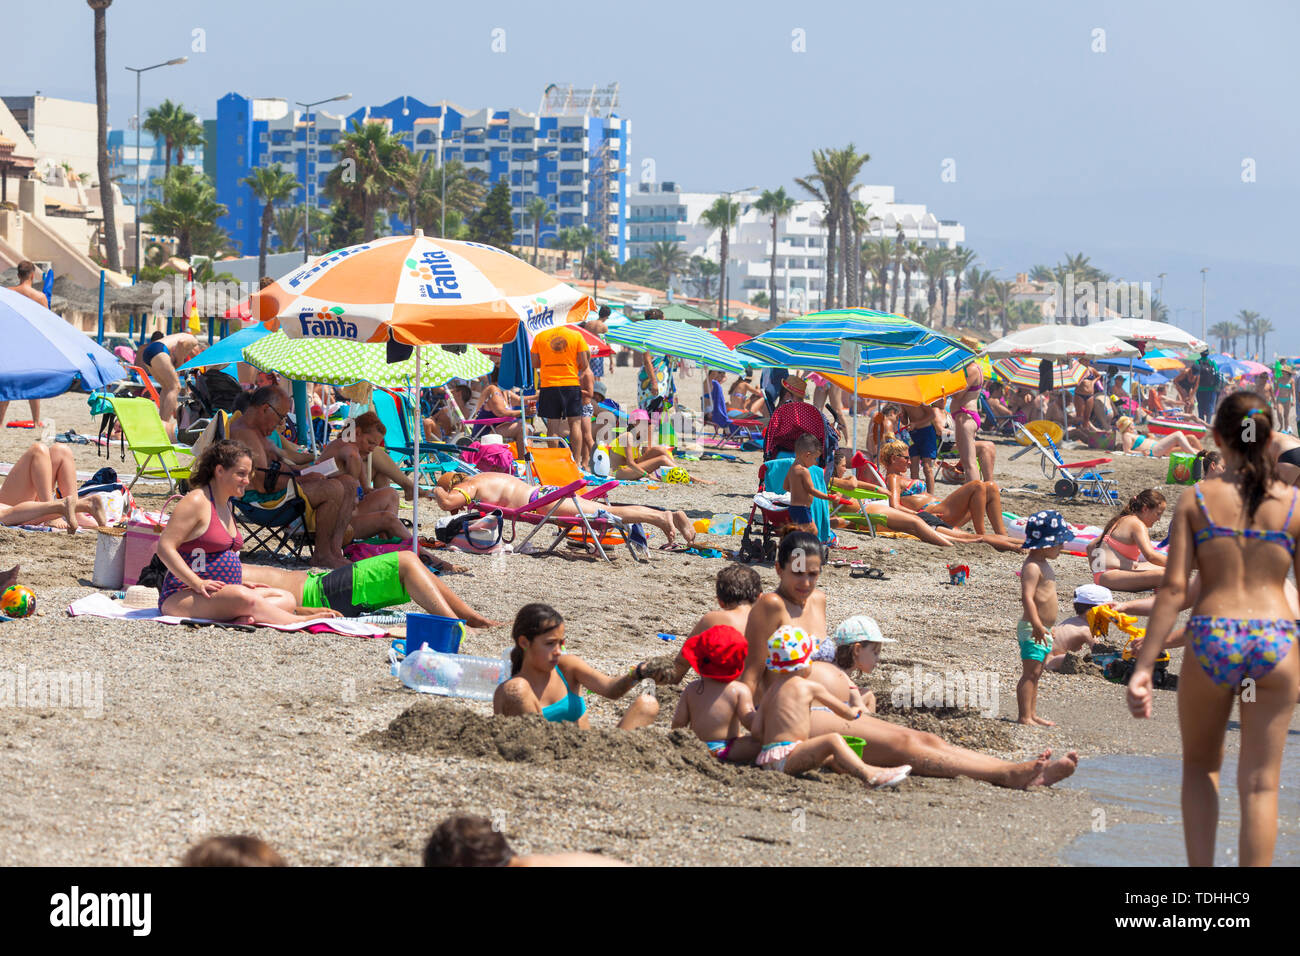 Costa Almeria, spanish tourism, heatwave in spain, busy crowded beach in roquetas de mar, almeria, spain Stock Photo